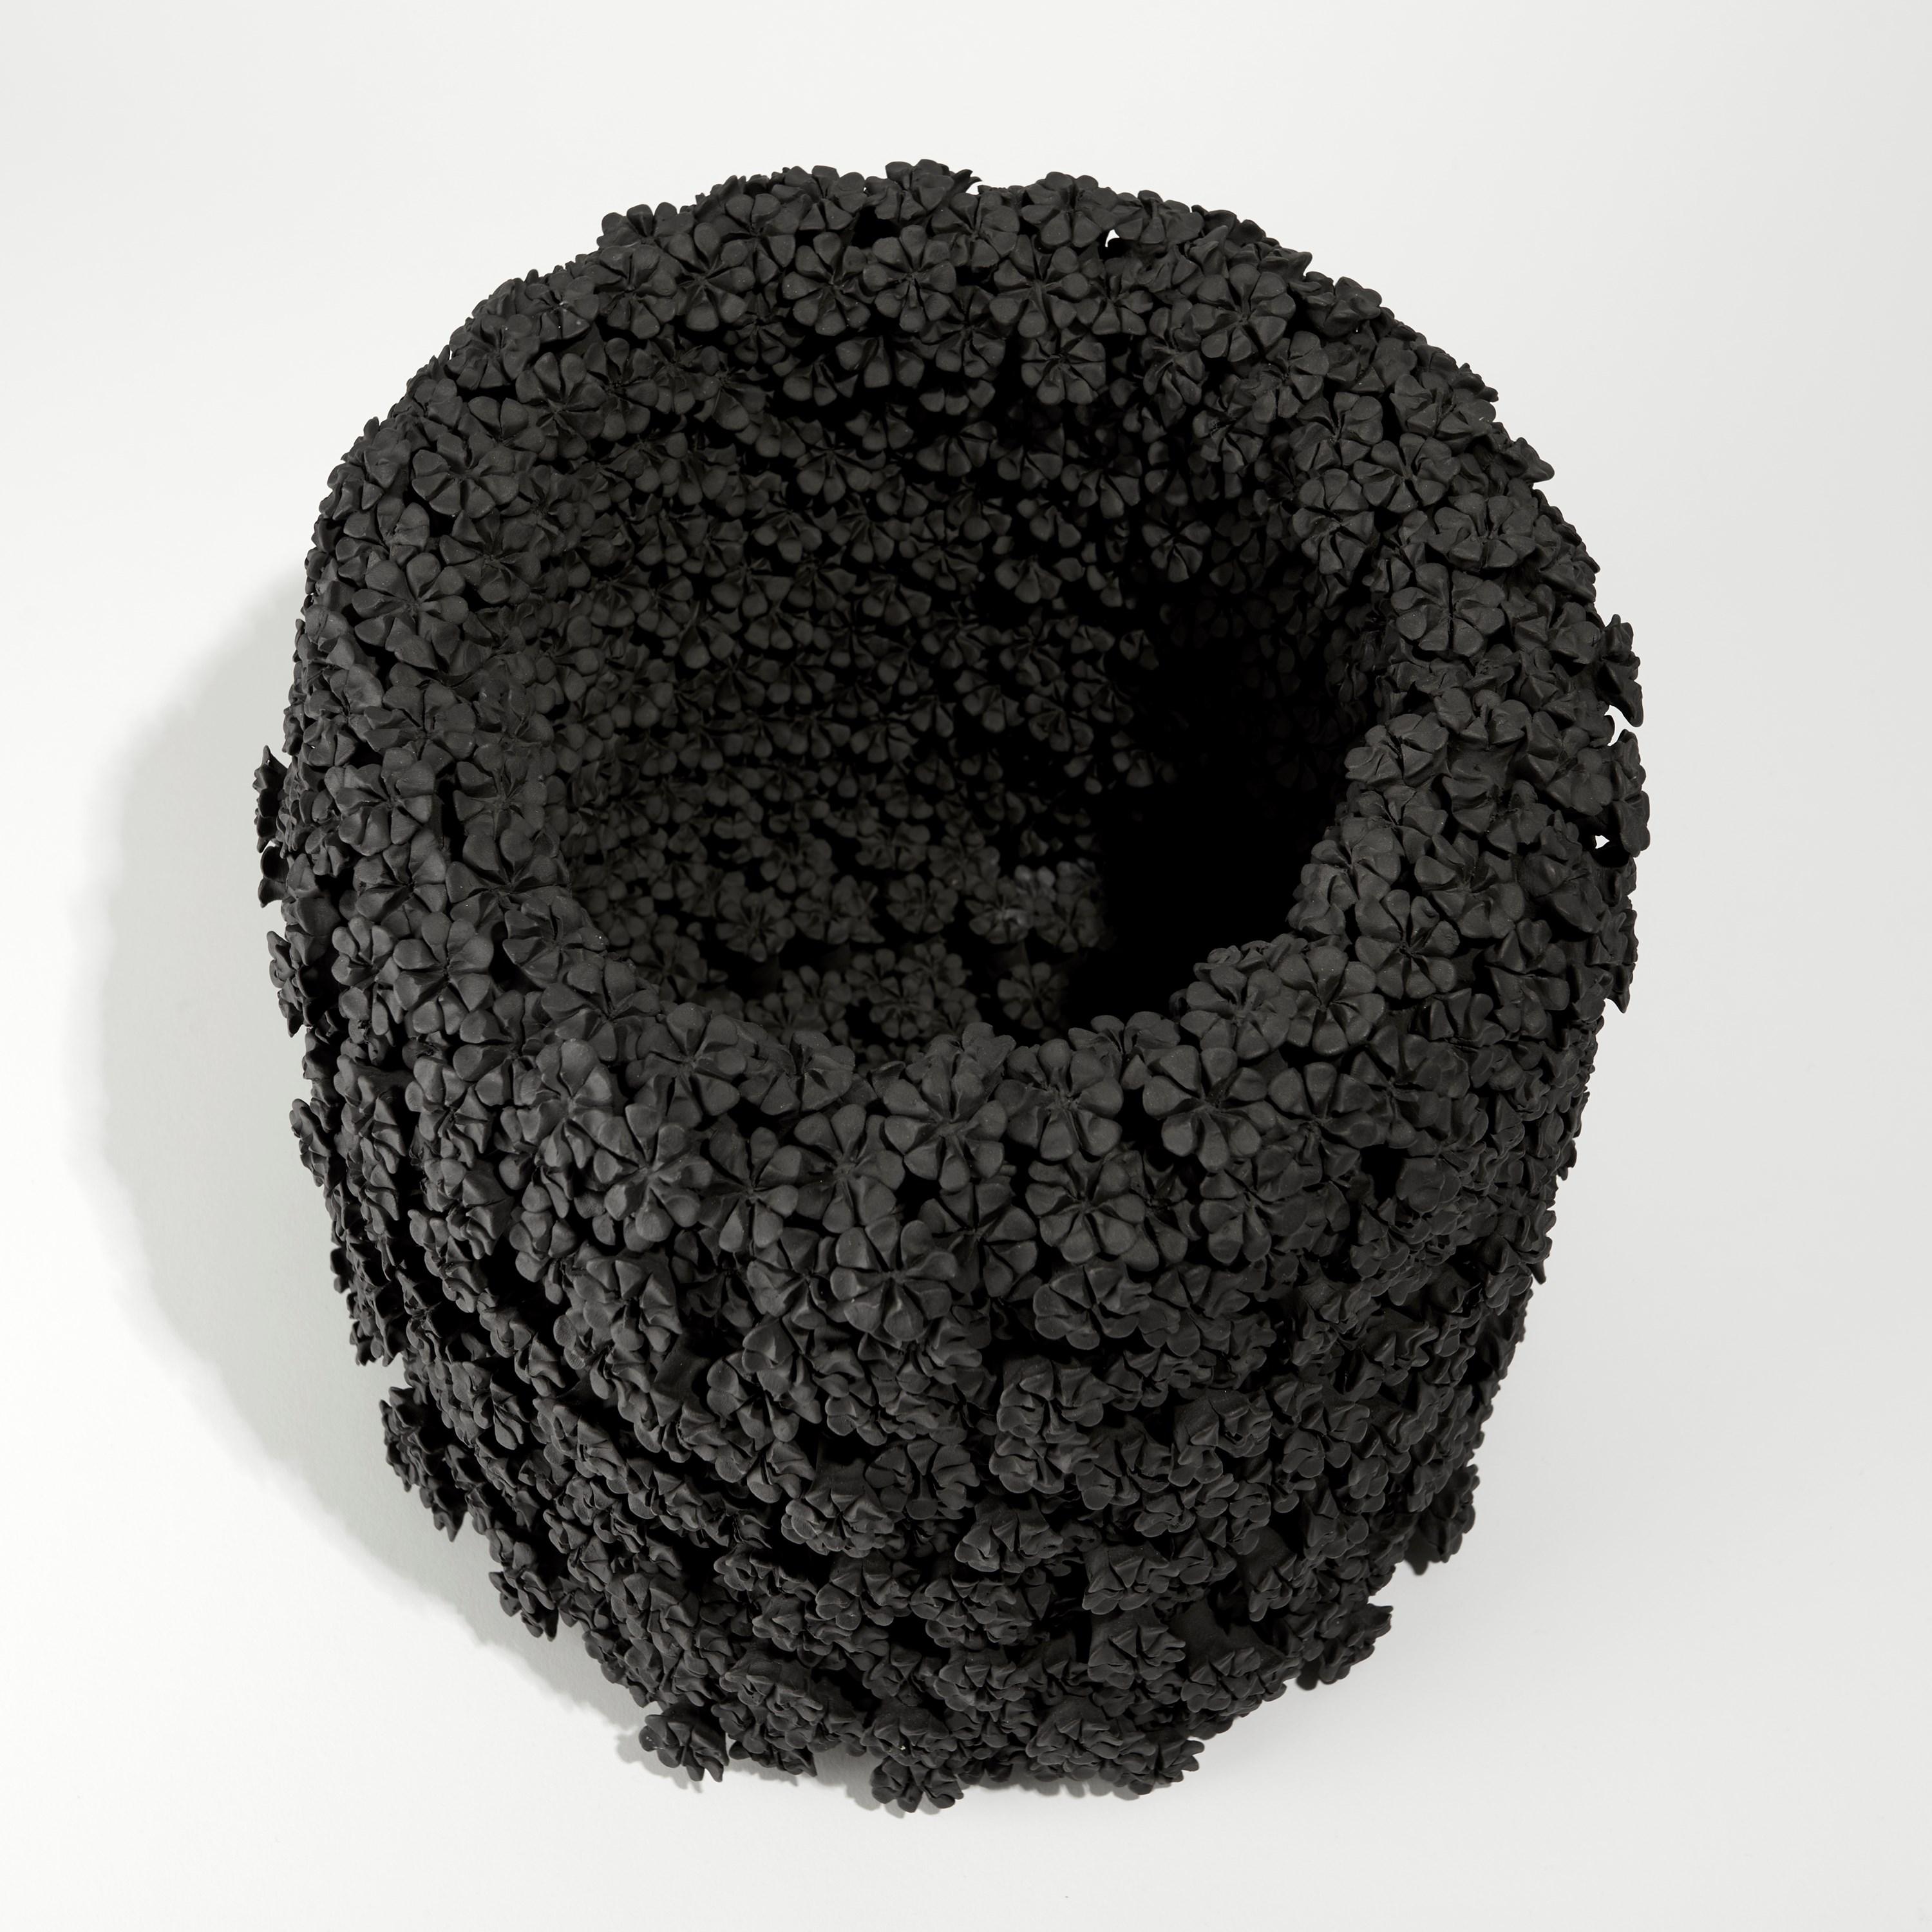 Organic Modern Daisy Cylinder, Floral Black Ceramic Sculpture & Vessel by Vanessa Hogge